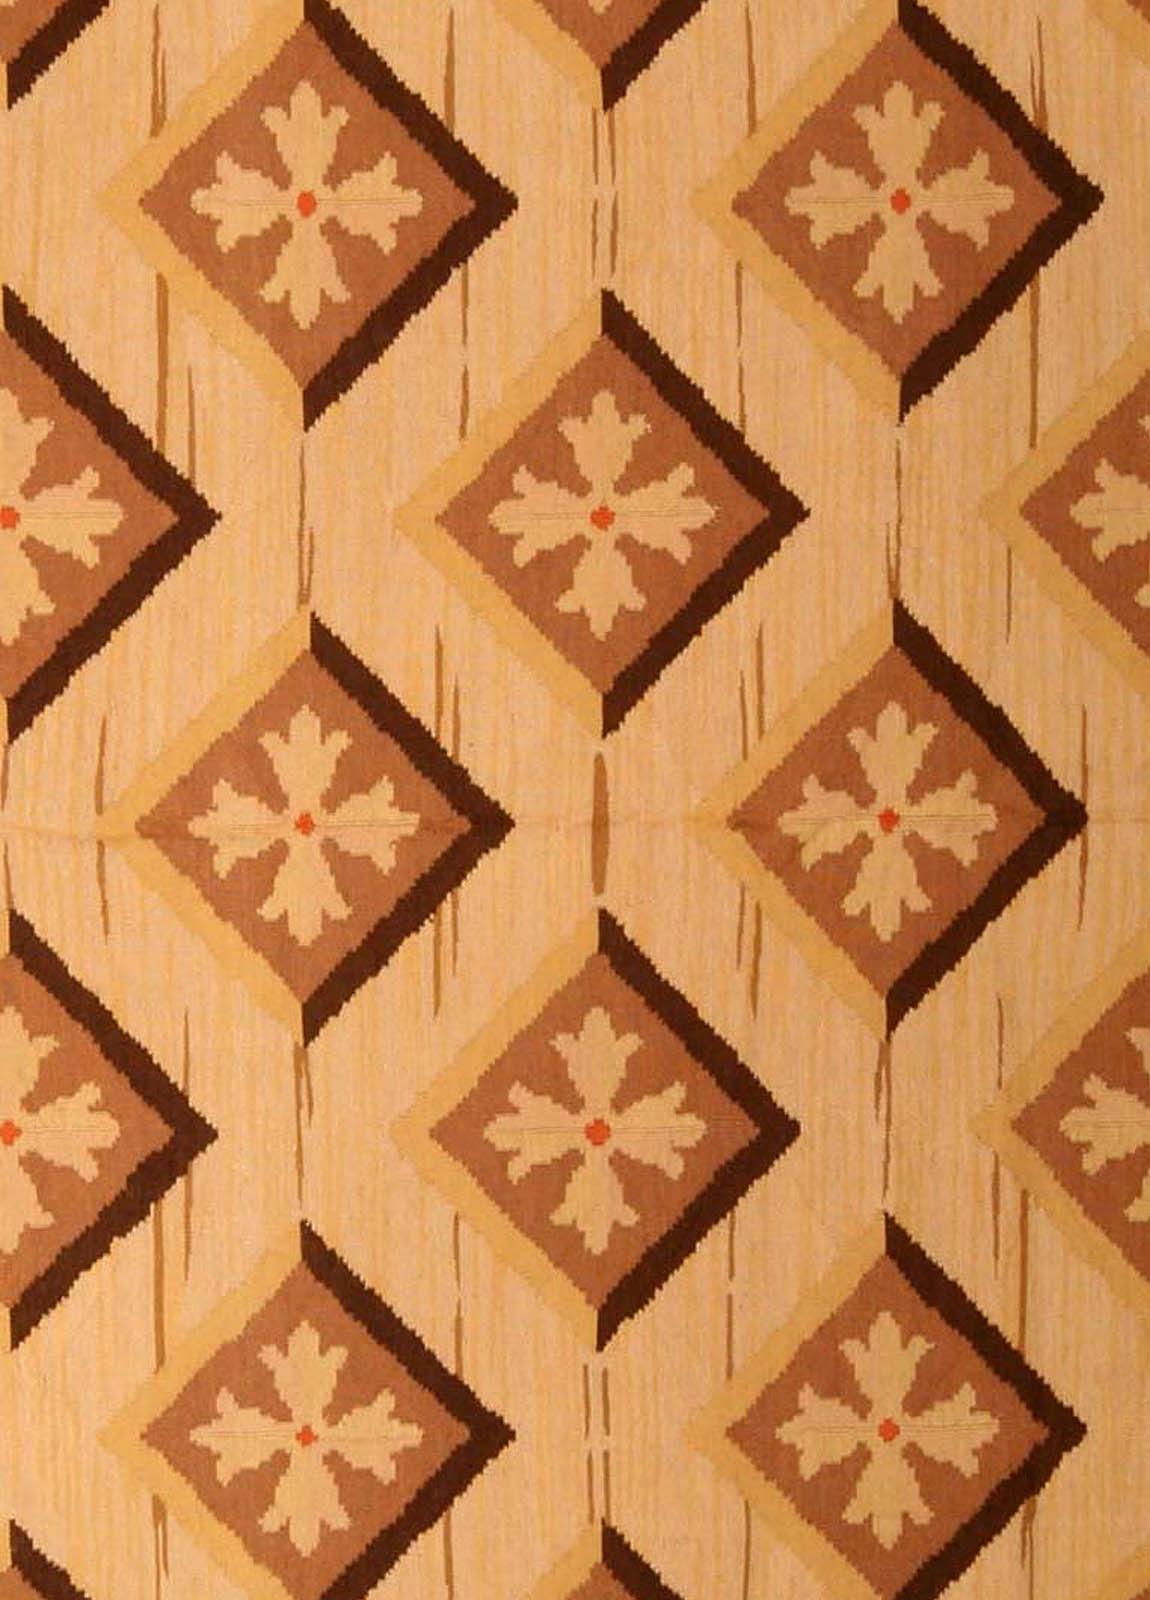 Contemporary Aubusson rug designed by Matthew P Smith for Doris Leslie Blau.
Size: 8'9